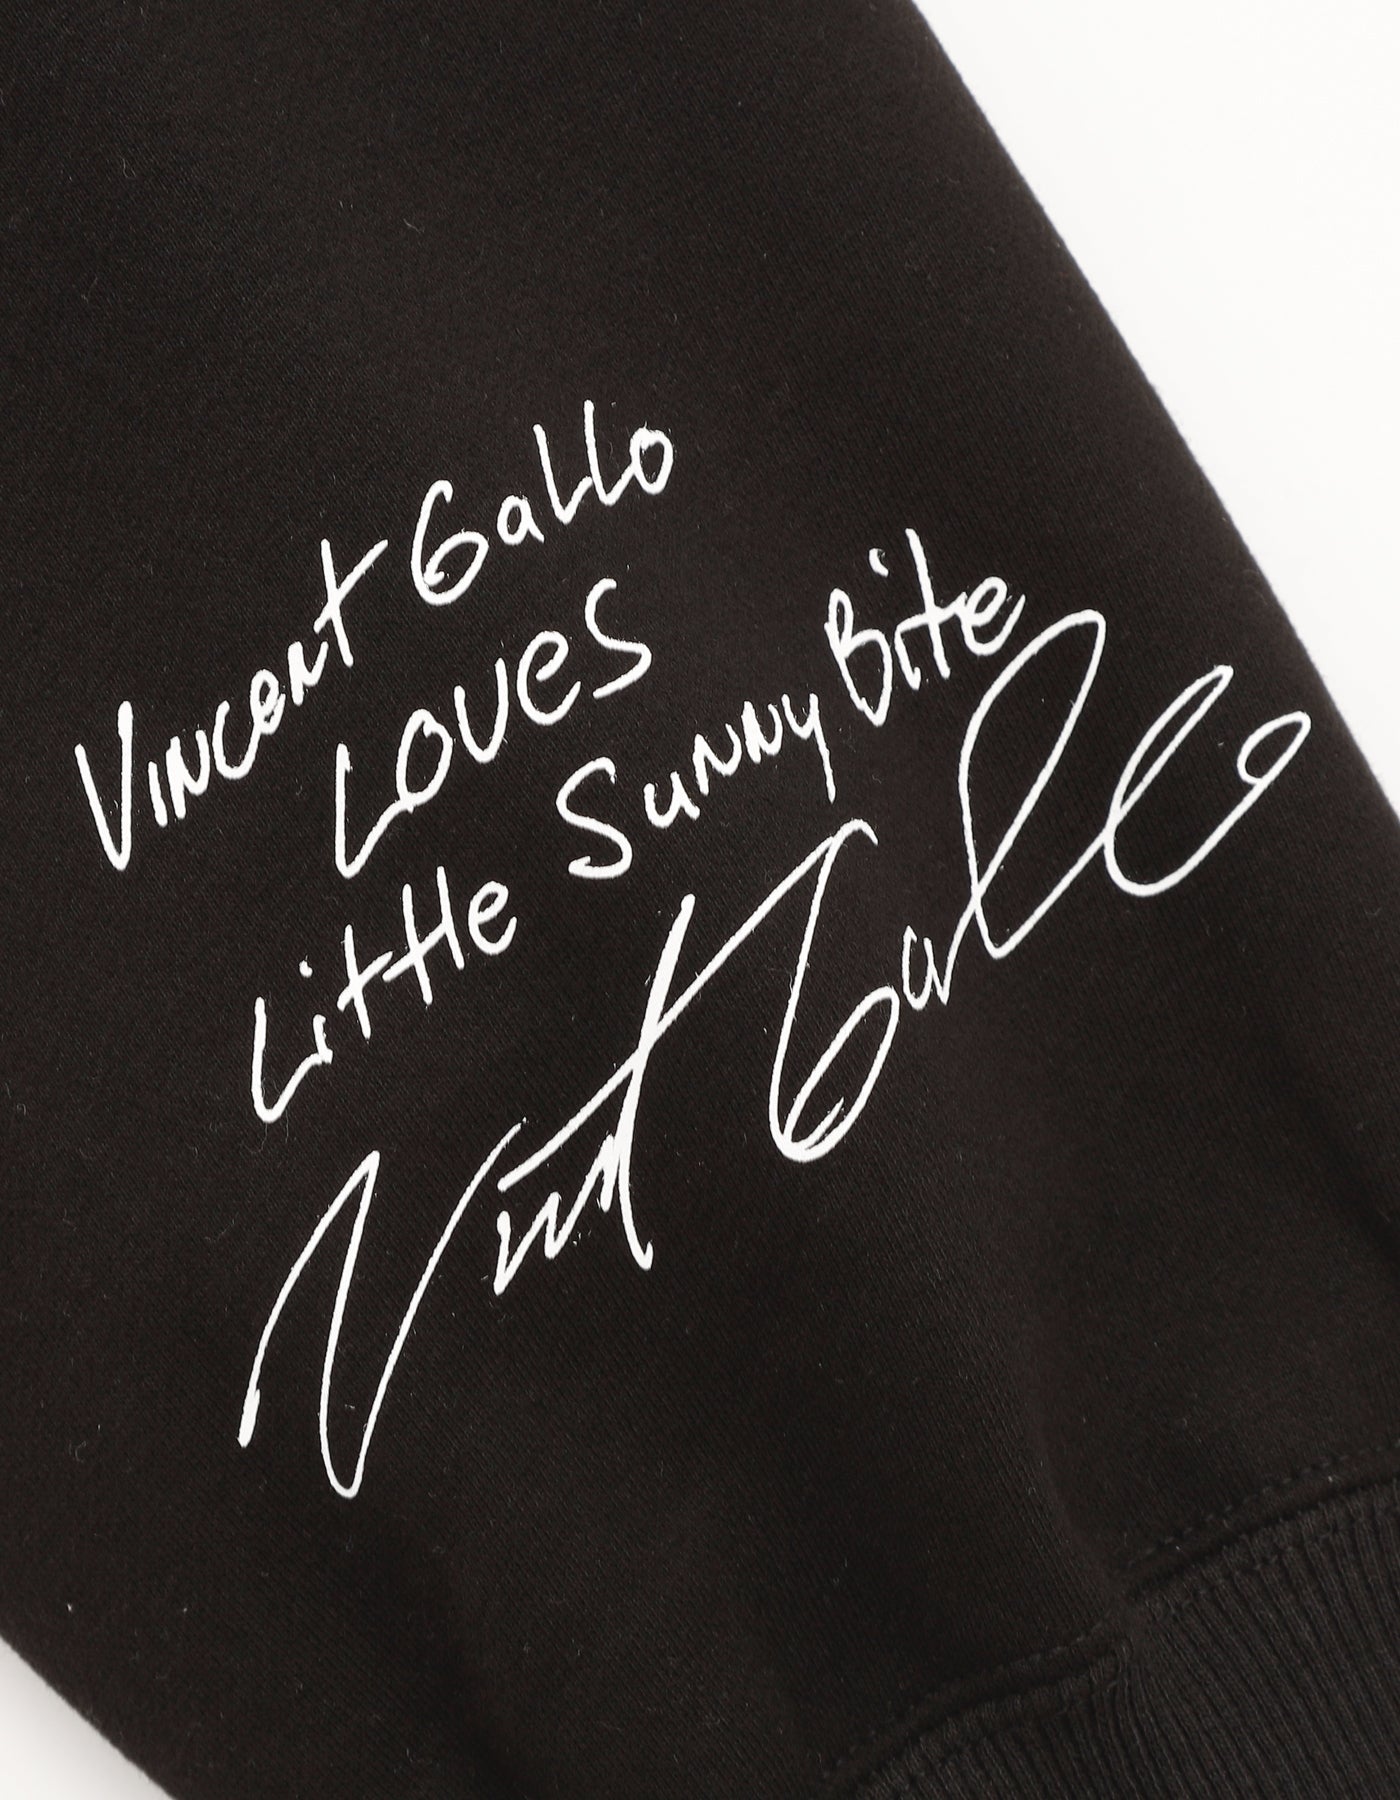 Vincent Gallo x little sunny bite face photo sweat top / BLACK